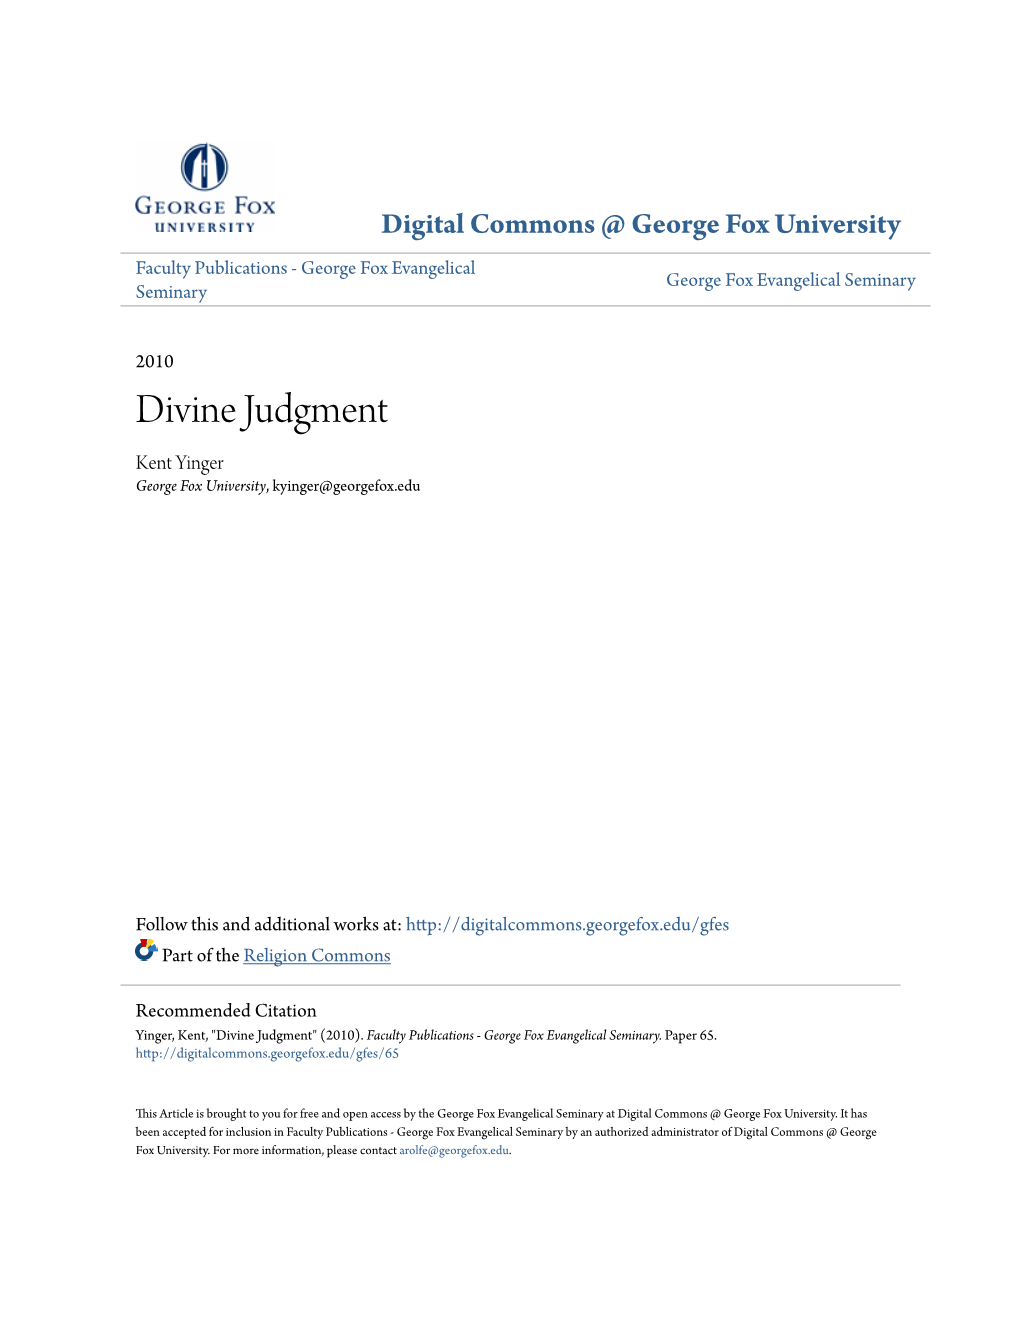 Divine Judgment Kent Yinger George Fox University, Kyinger@Georgefox.Edu